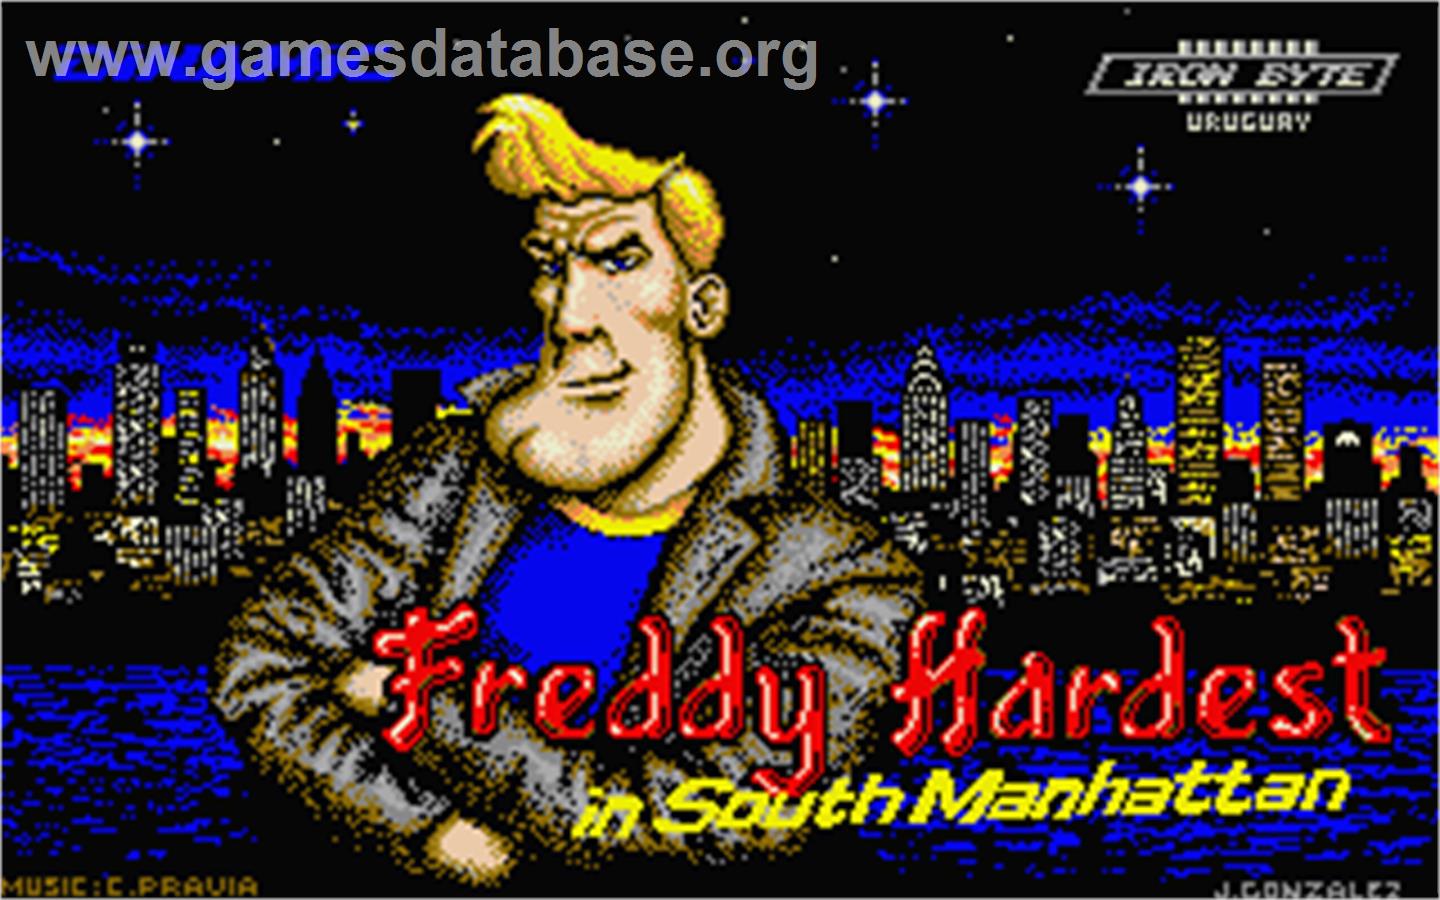 Freddy Hardest in South Manhattan - Atari ST - Artwork - Title Screen